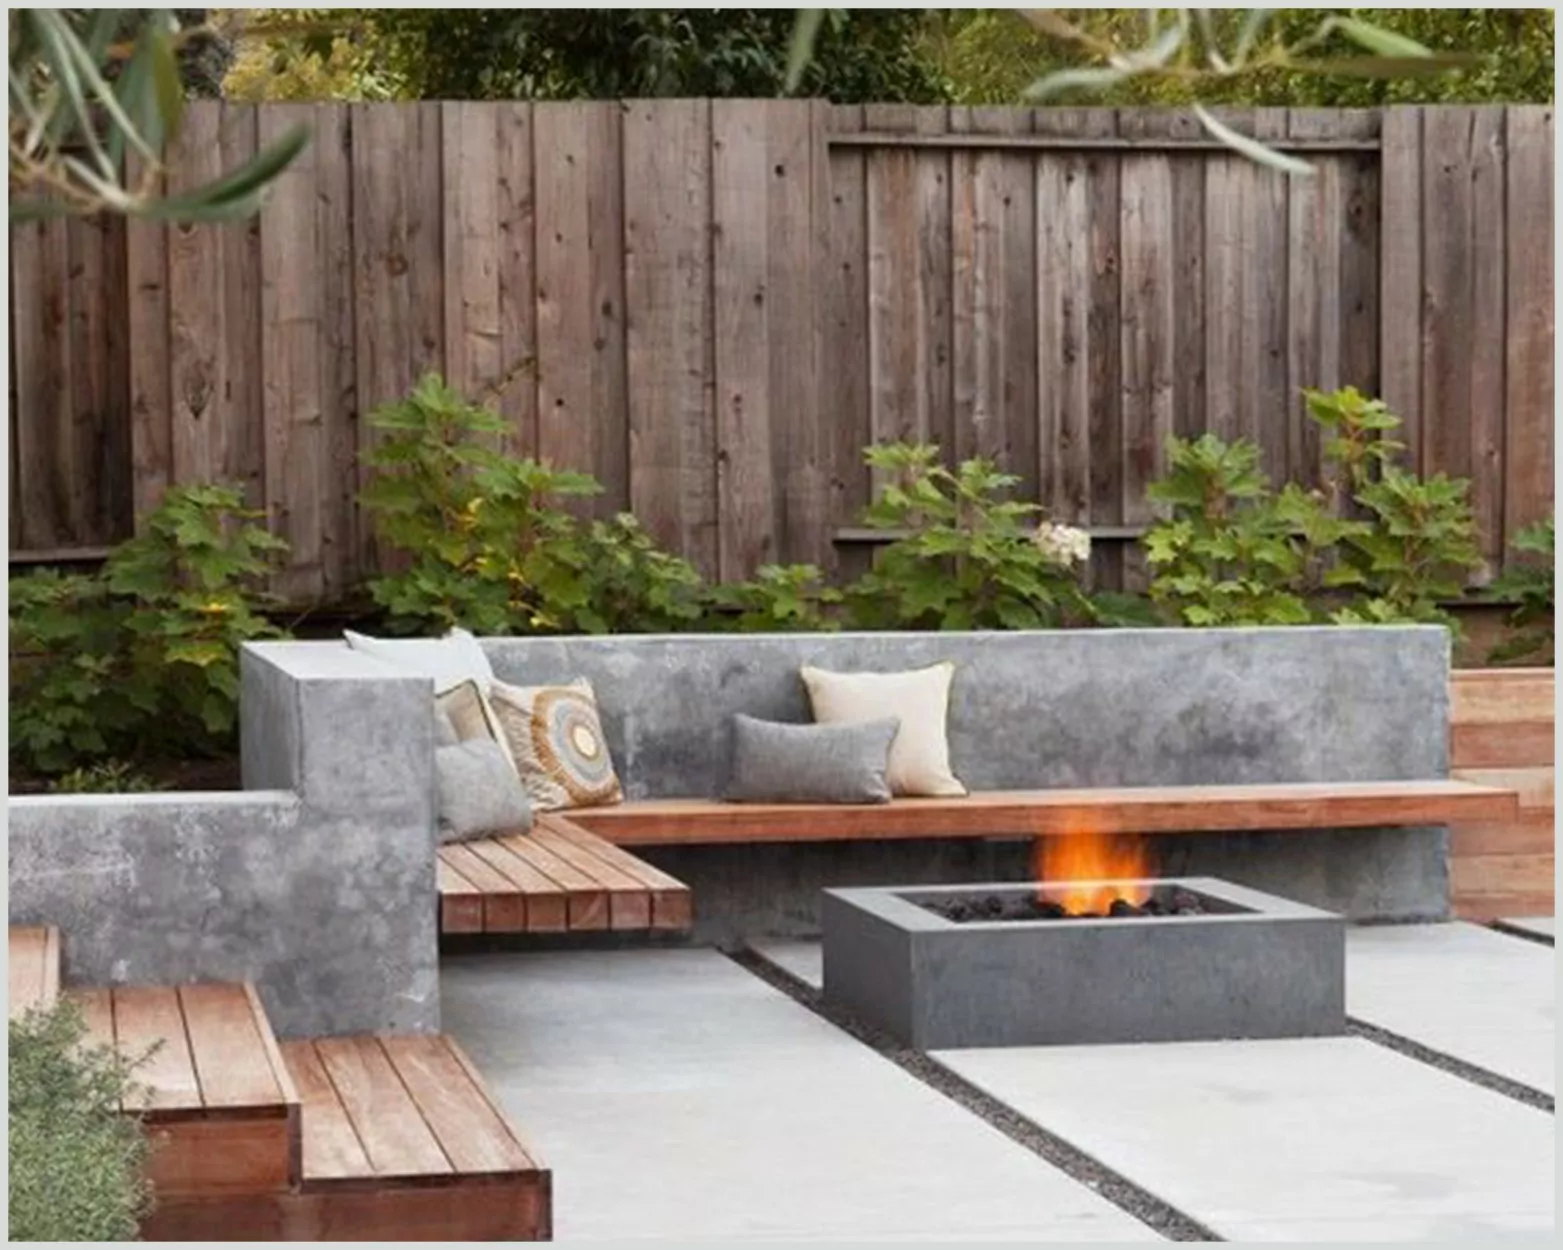 Alt Tag: Patio furniture designed using decorative concrete finish